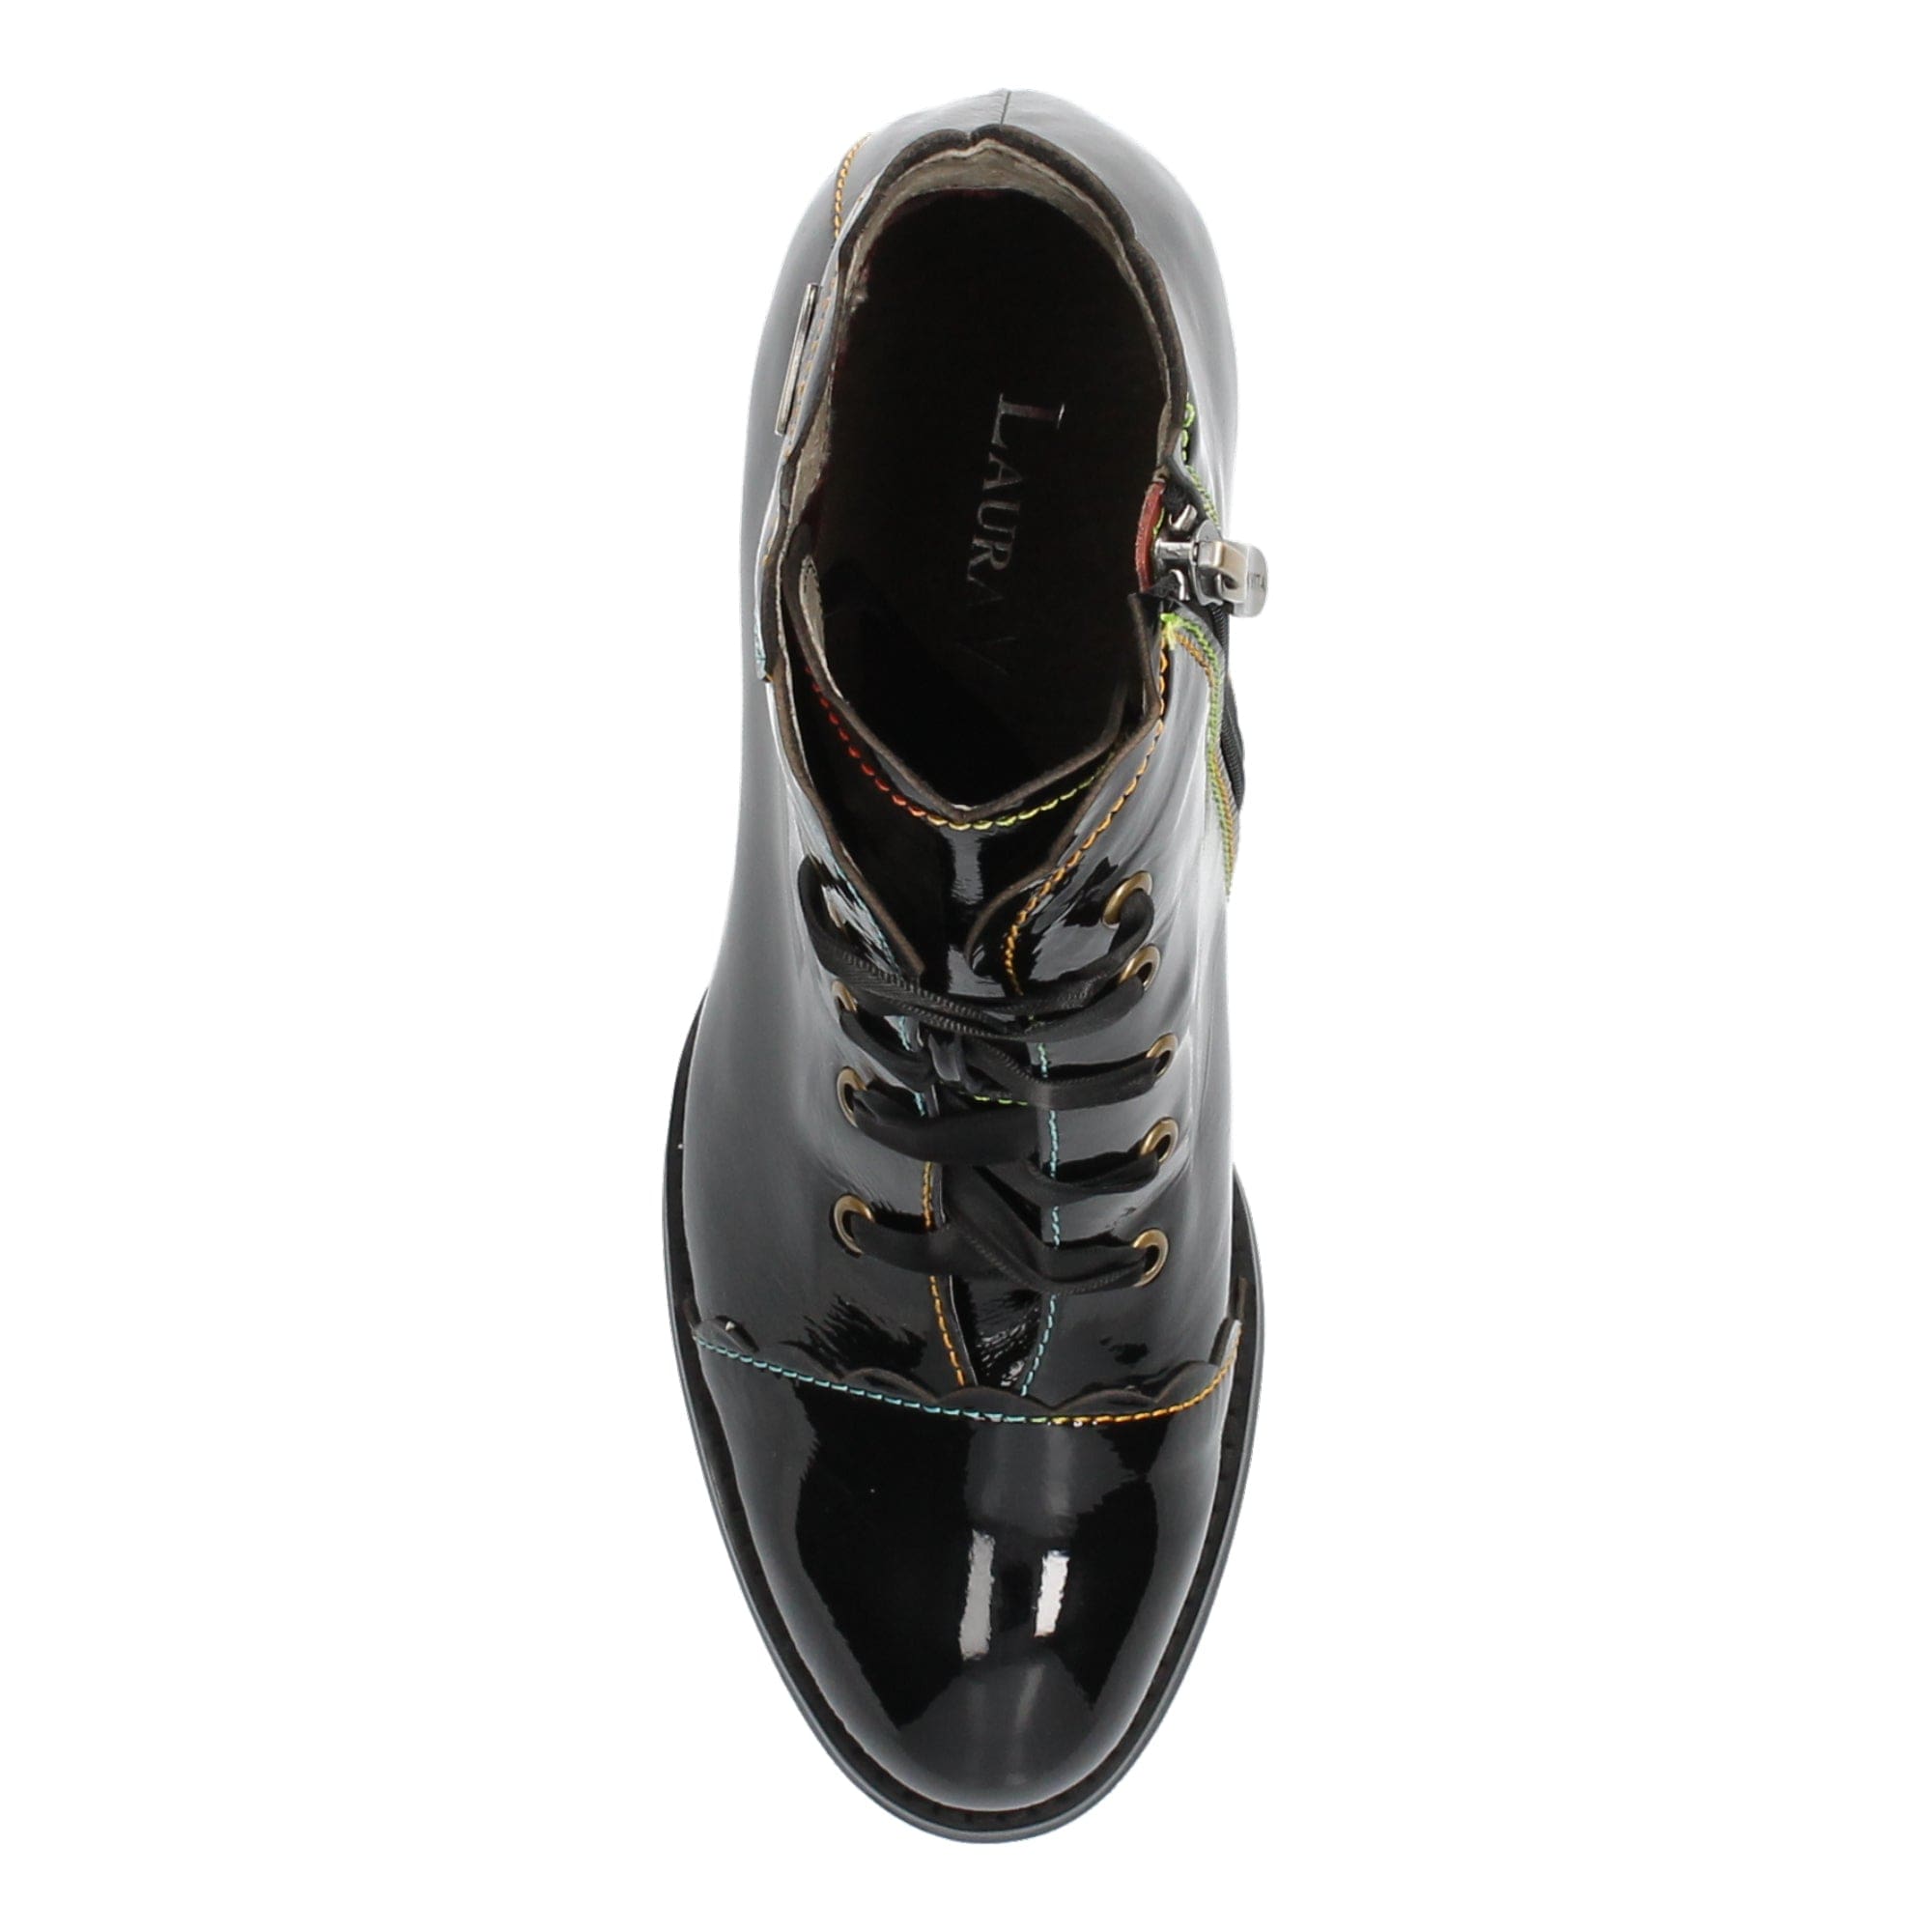 Chaussure GYCROO 11 - Boots